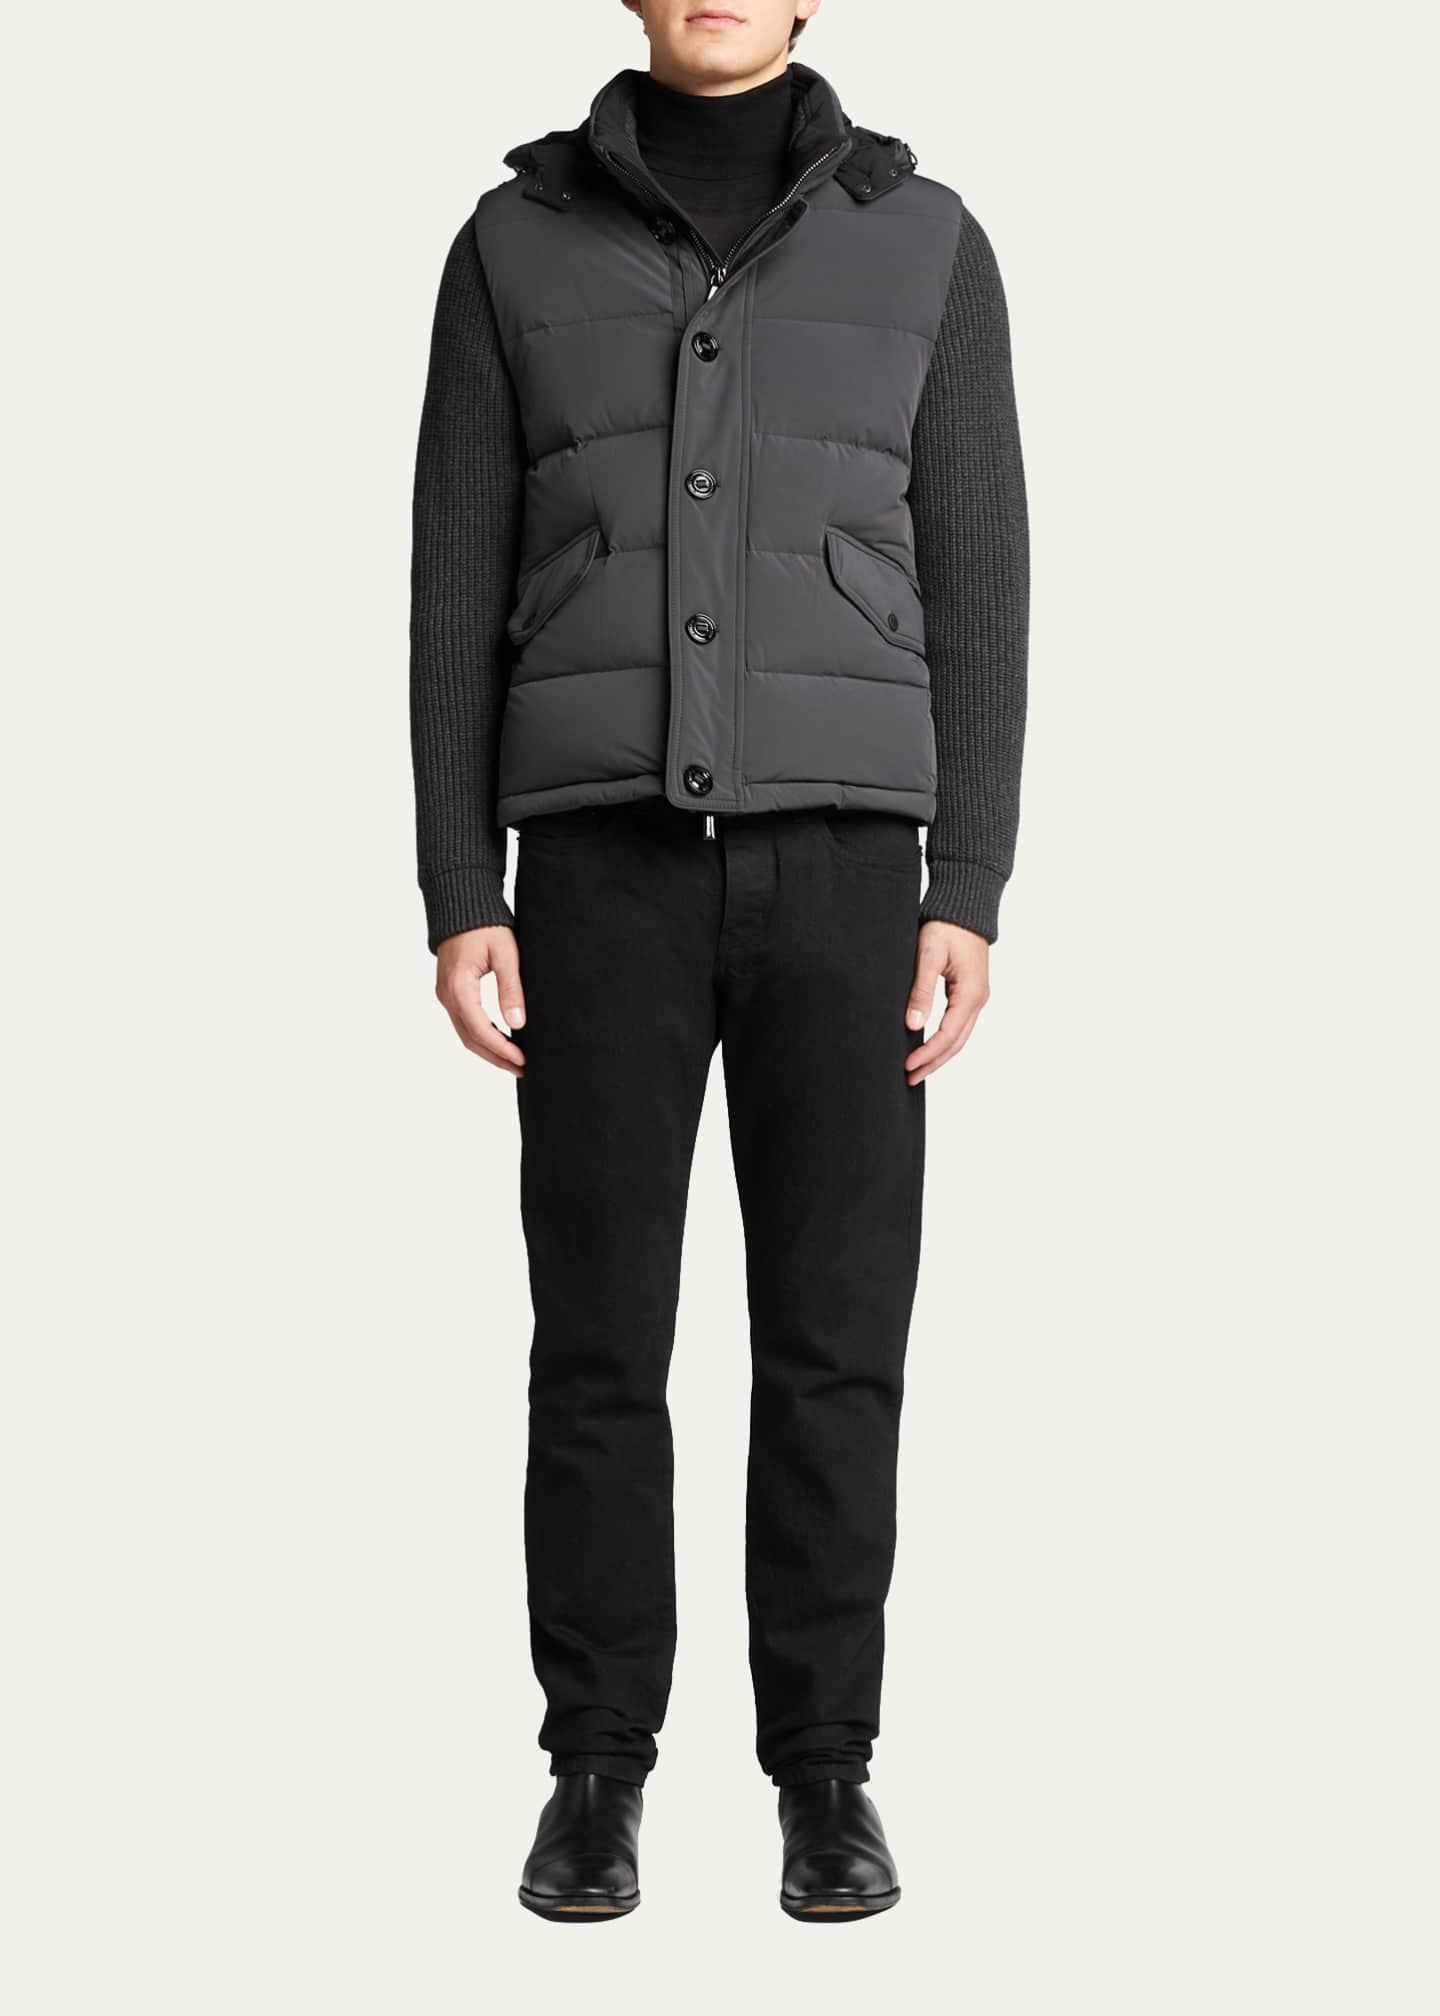 MooRER Men's Hybrid Bomber Jacket w/ Knit Sleeves - Bergdorf Goodman